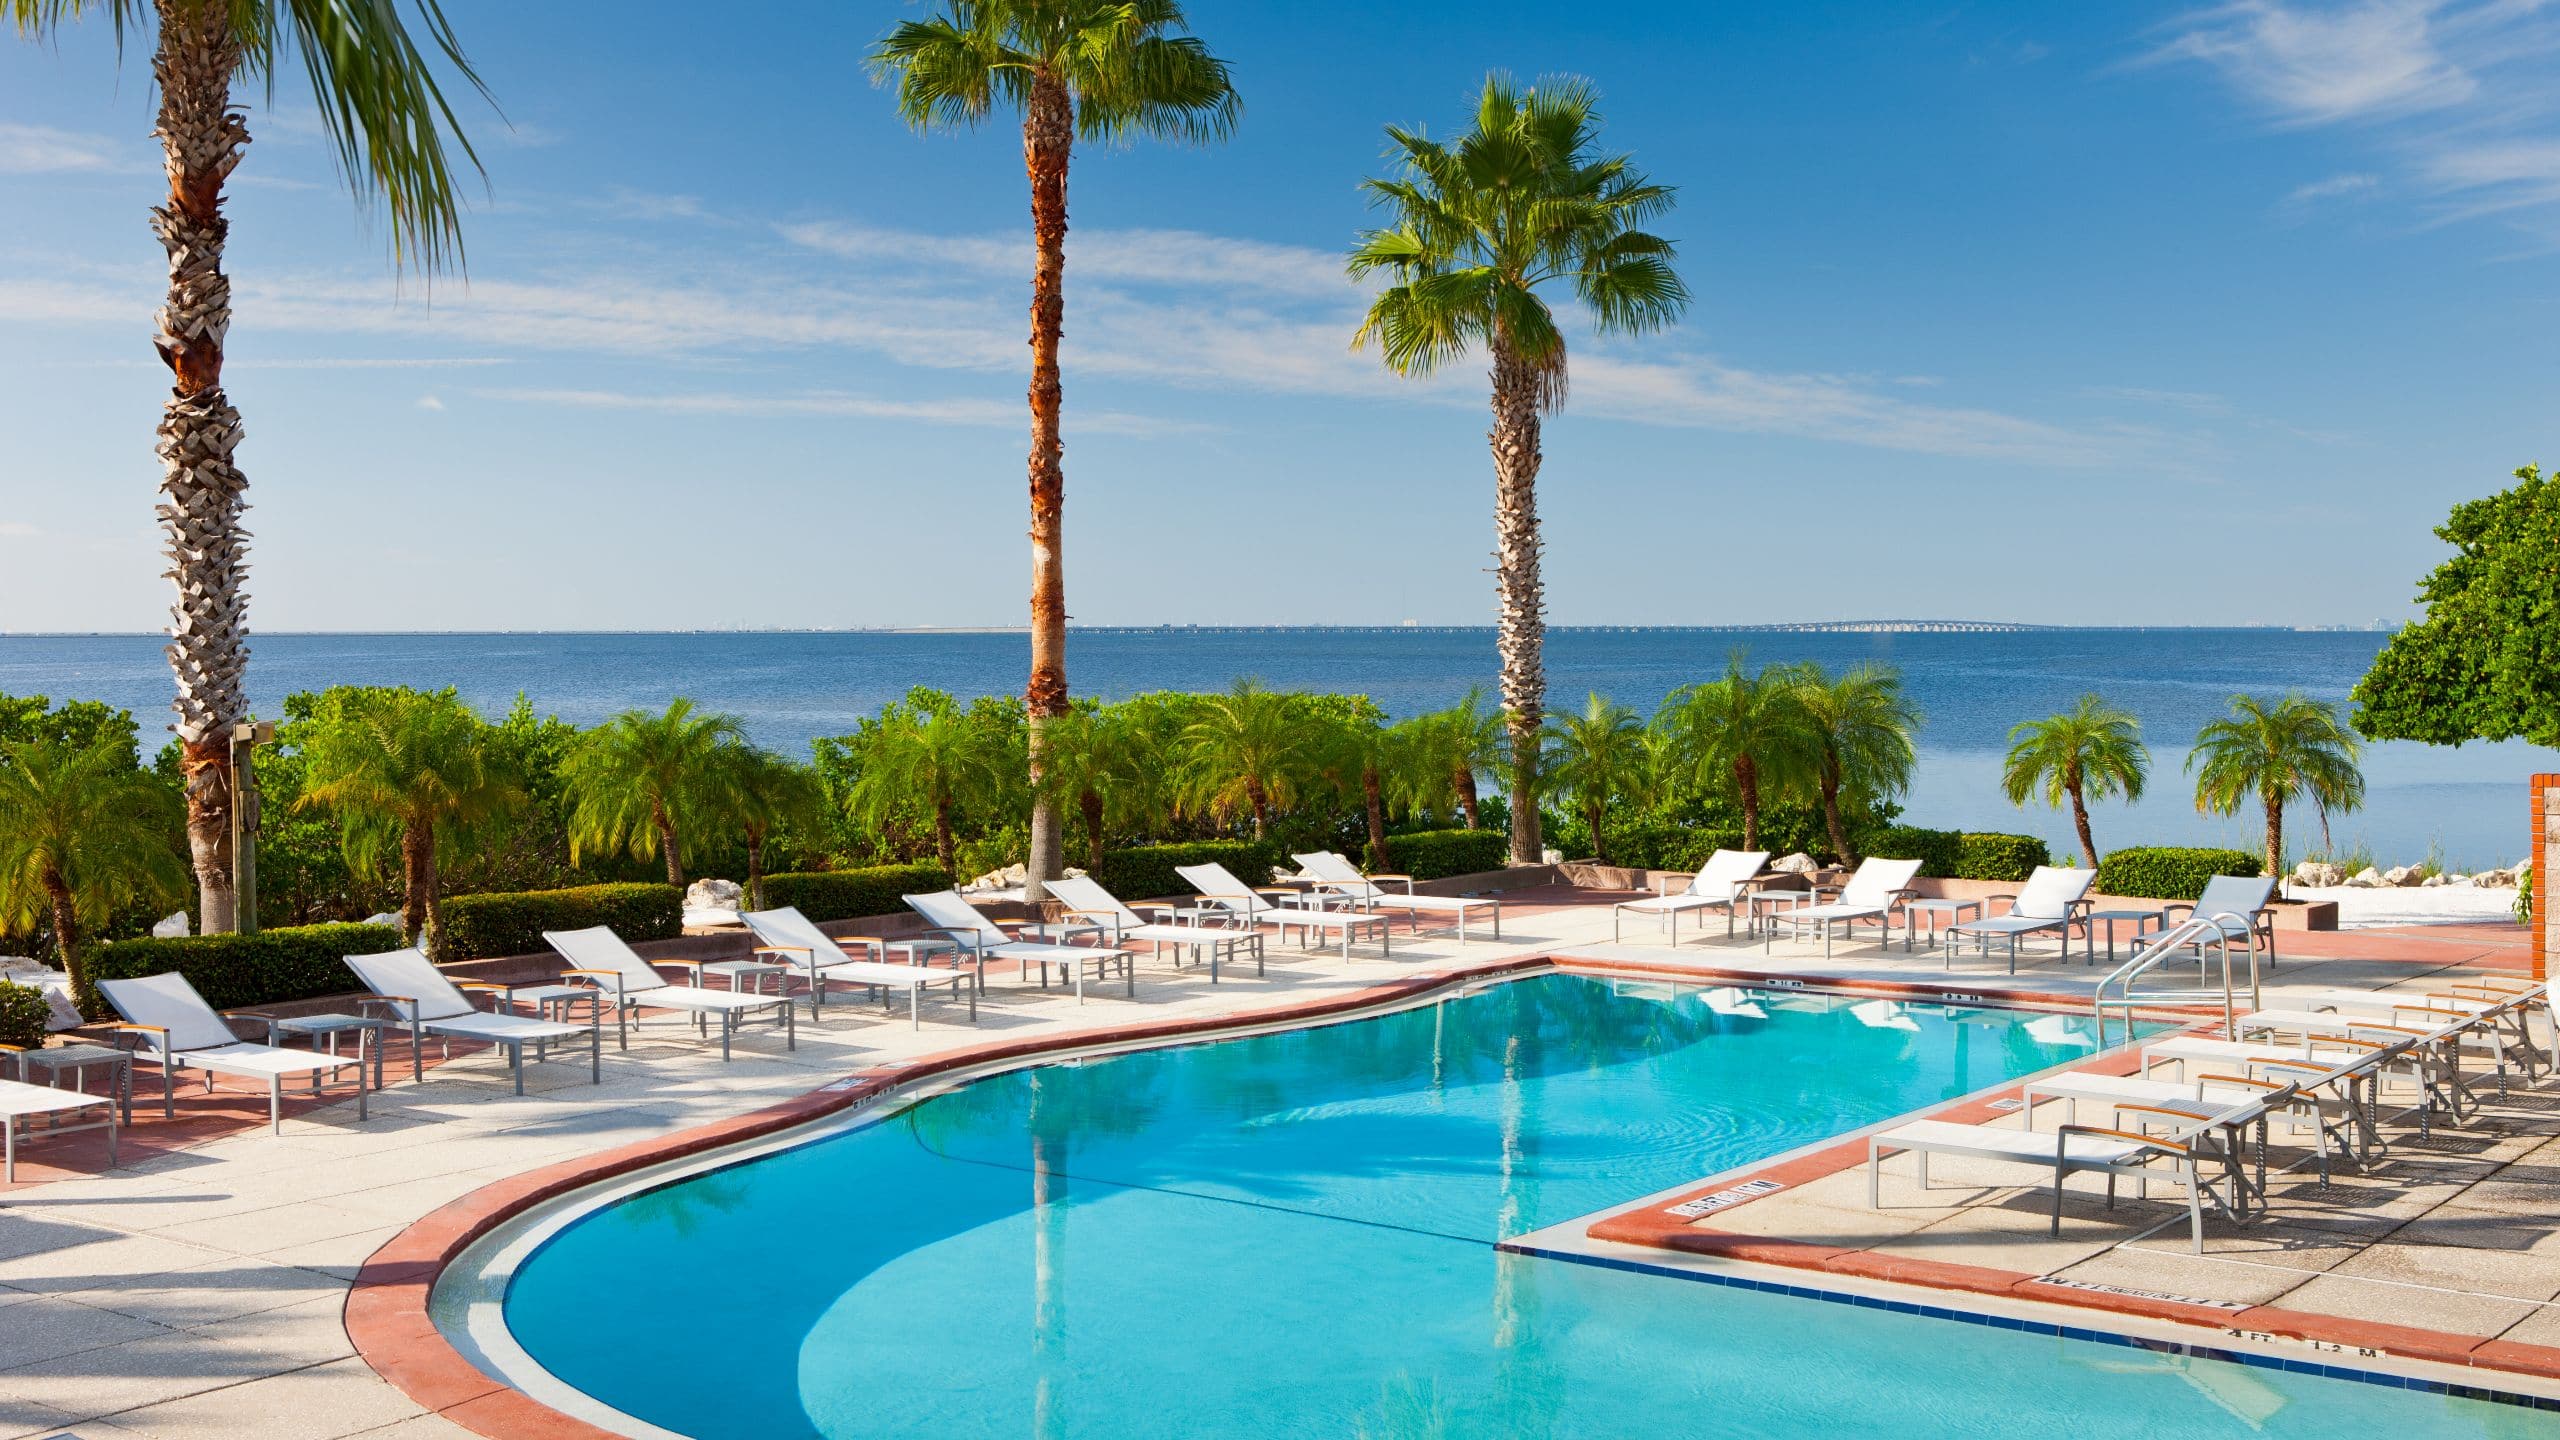 Tampa Bay Waterfront Hotel In Tampa Fl Grand Hyatt Tampa Bay